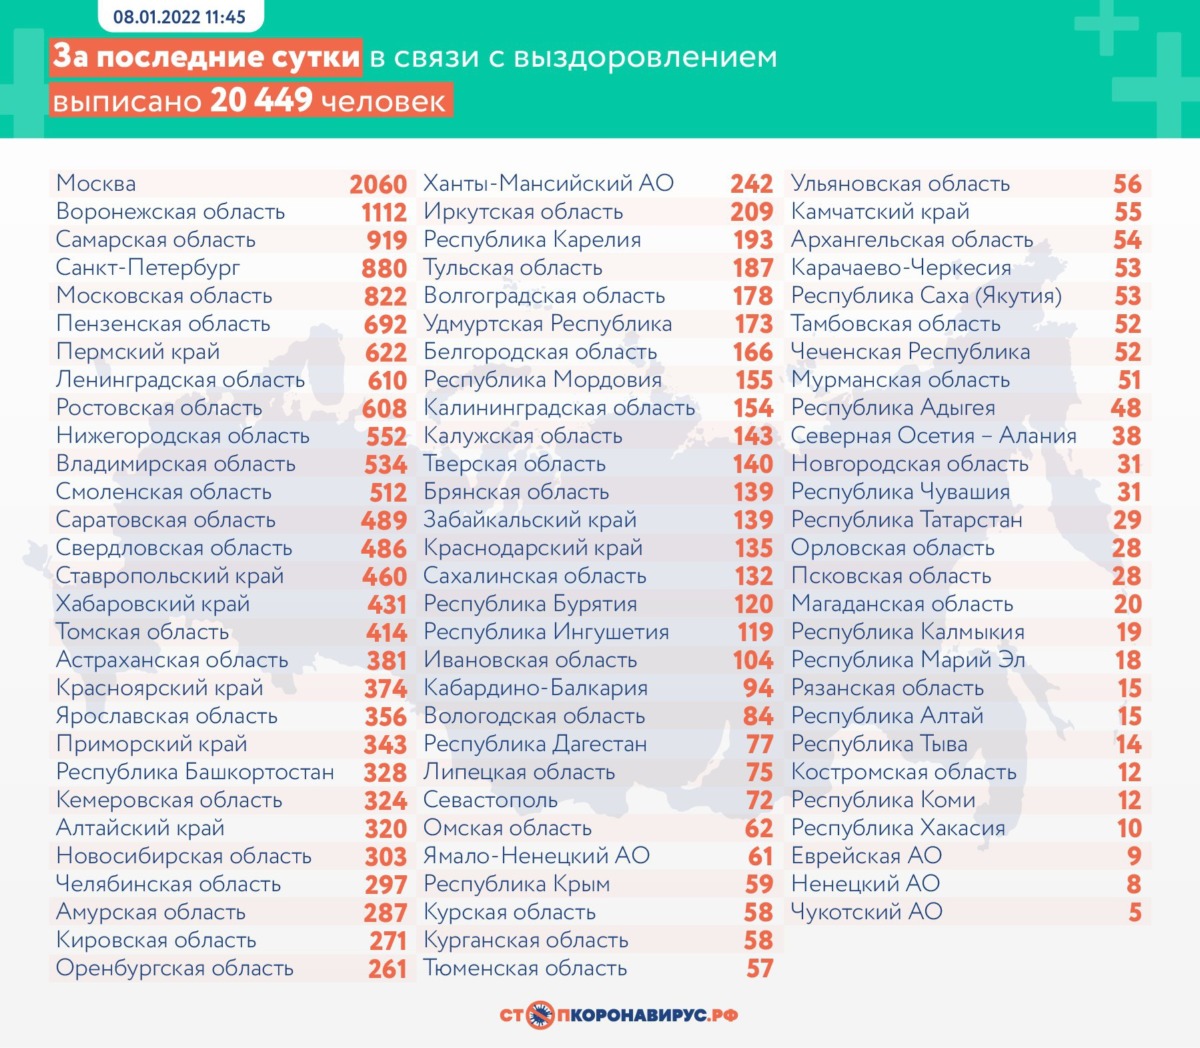 Оперативная статистика по коронавирусу в России на 8 января